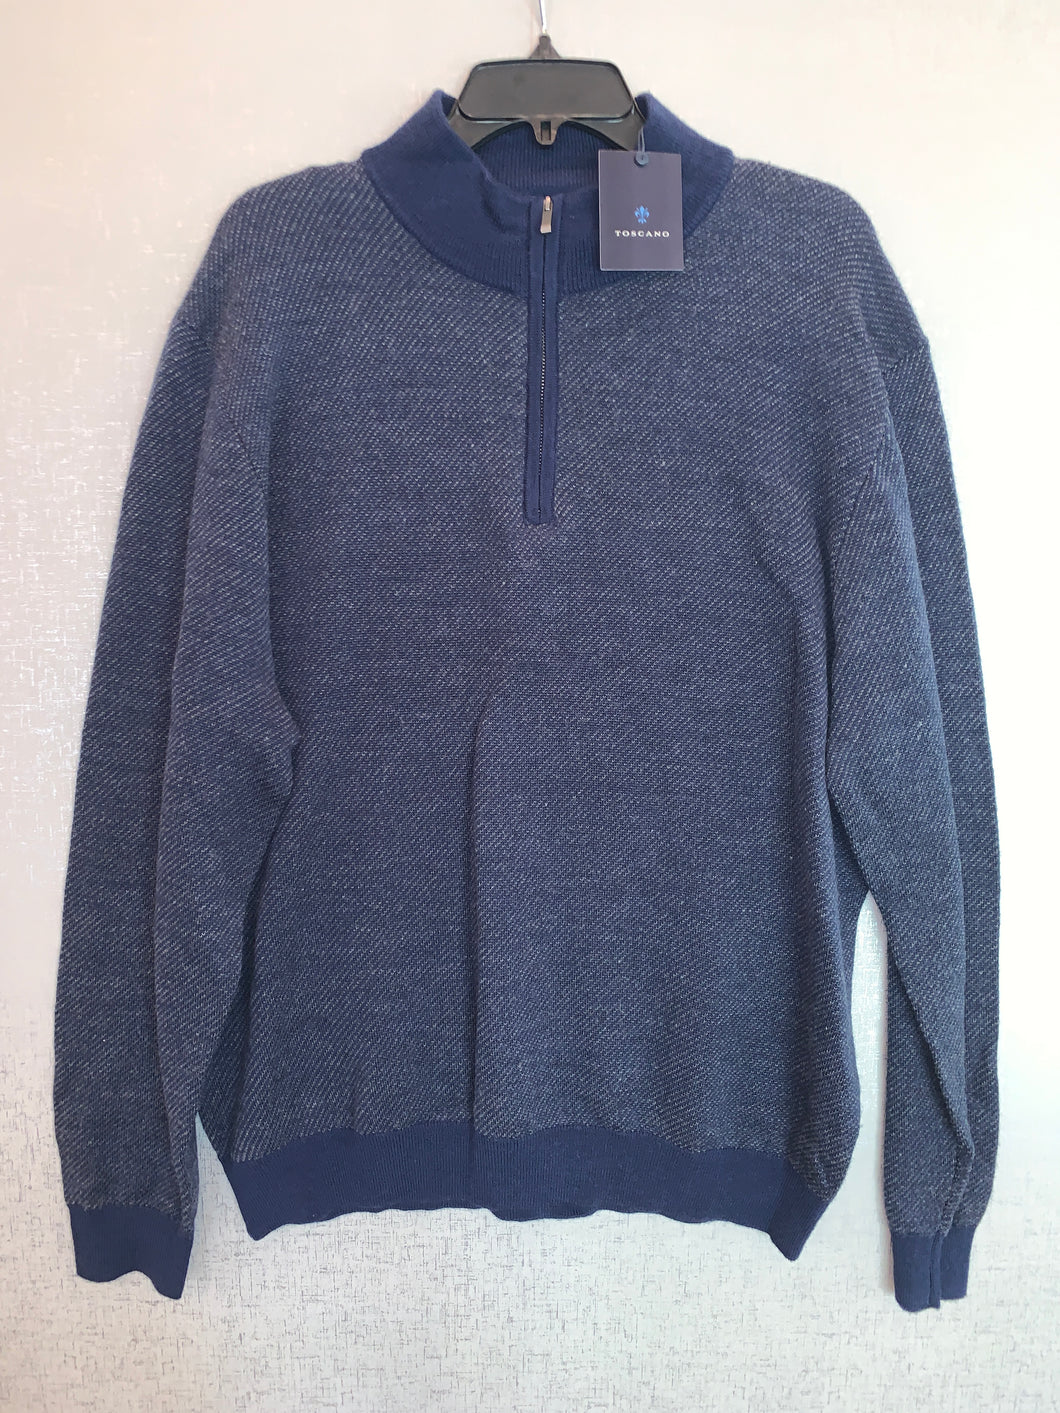 New - Men's Toscano Mock Neck Quarter Zip Diagonal Sweater - Blue - XL